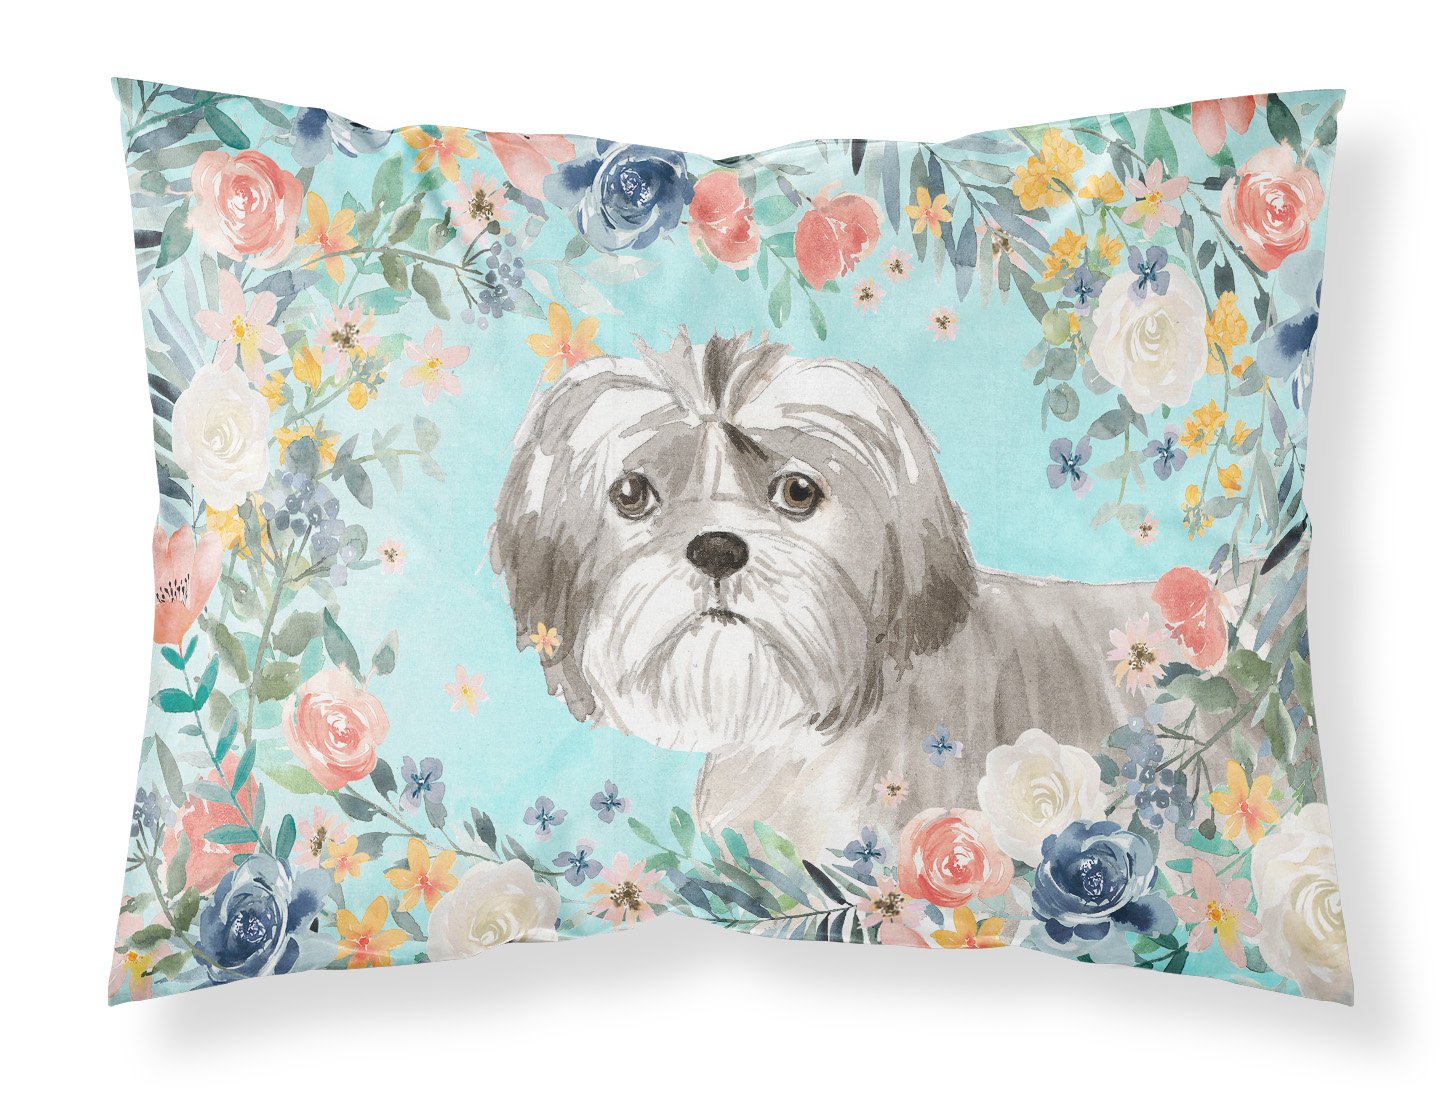 Shih Tzu Puppy Fabric Standard Pillowcase CK3409PILLOWCASE by Caroline's Treasures